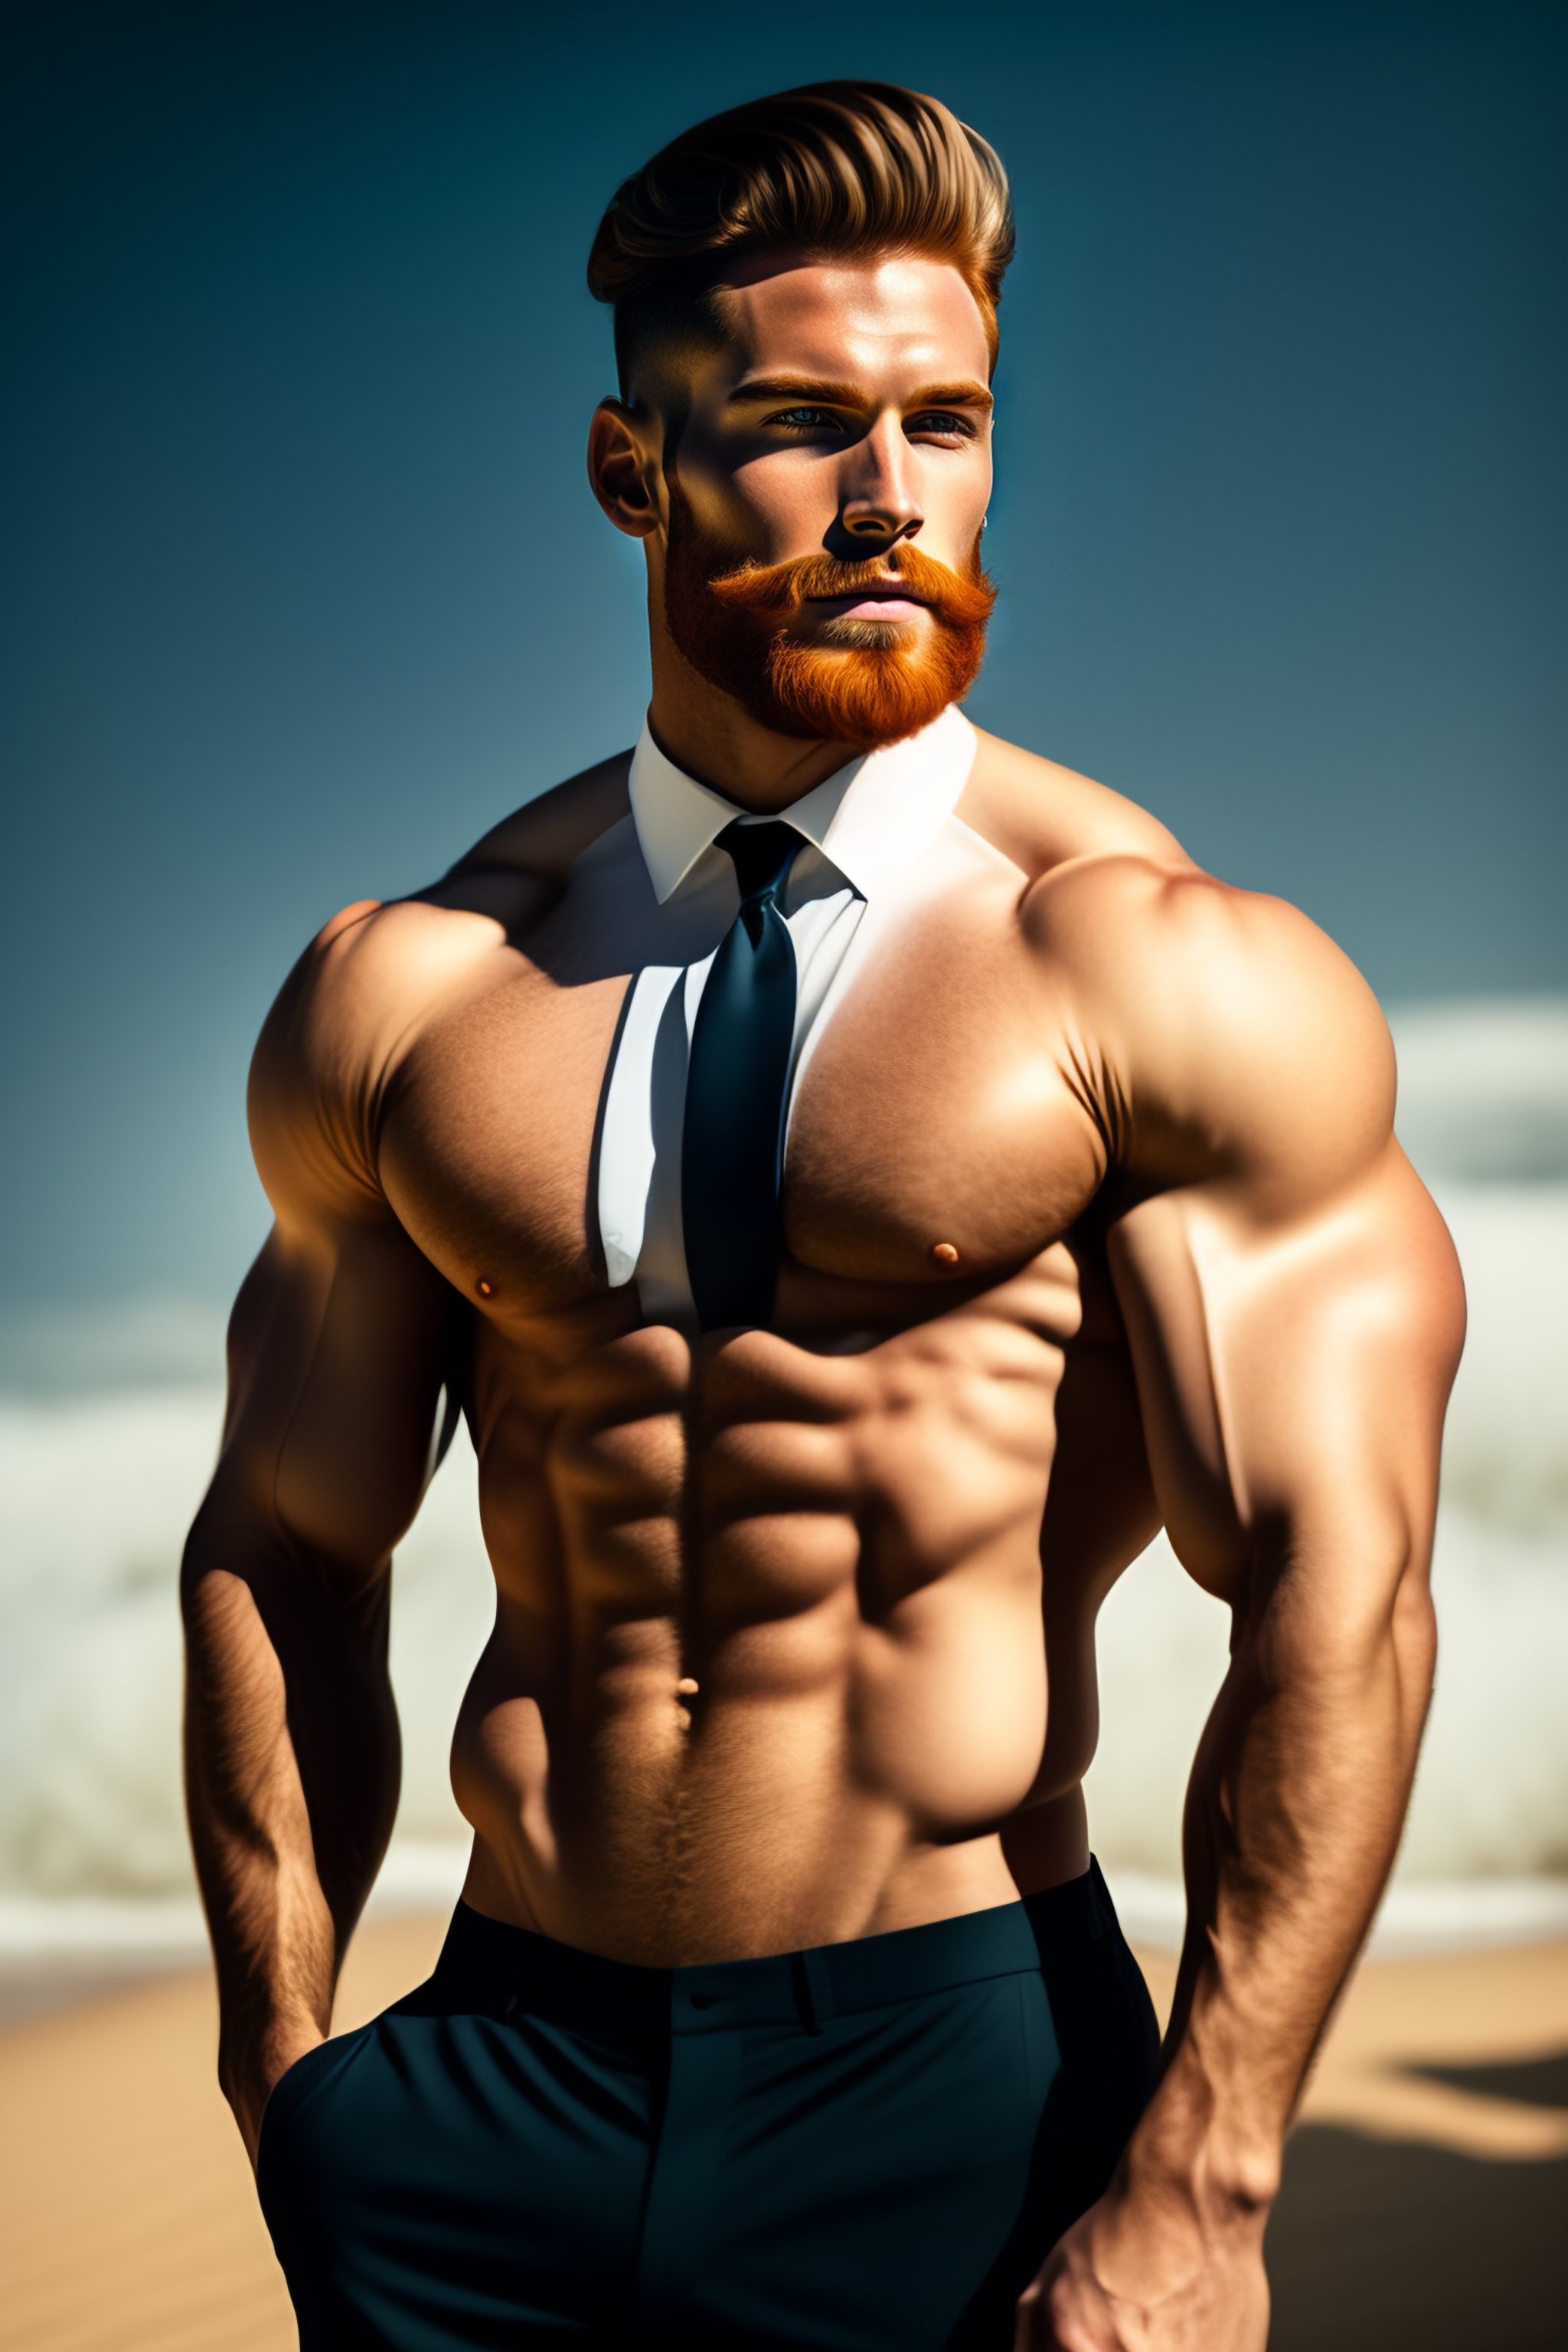 Lexica Ginger Beard Brown Short Hair 6ft Man Swimmers Body Pale Skinned Muscular Jaw 3 